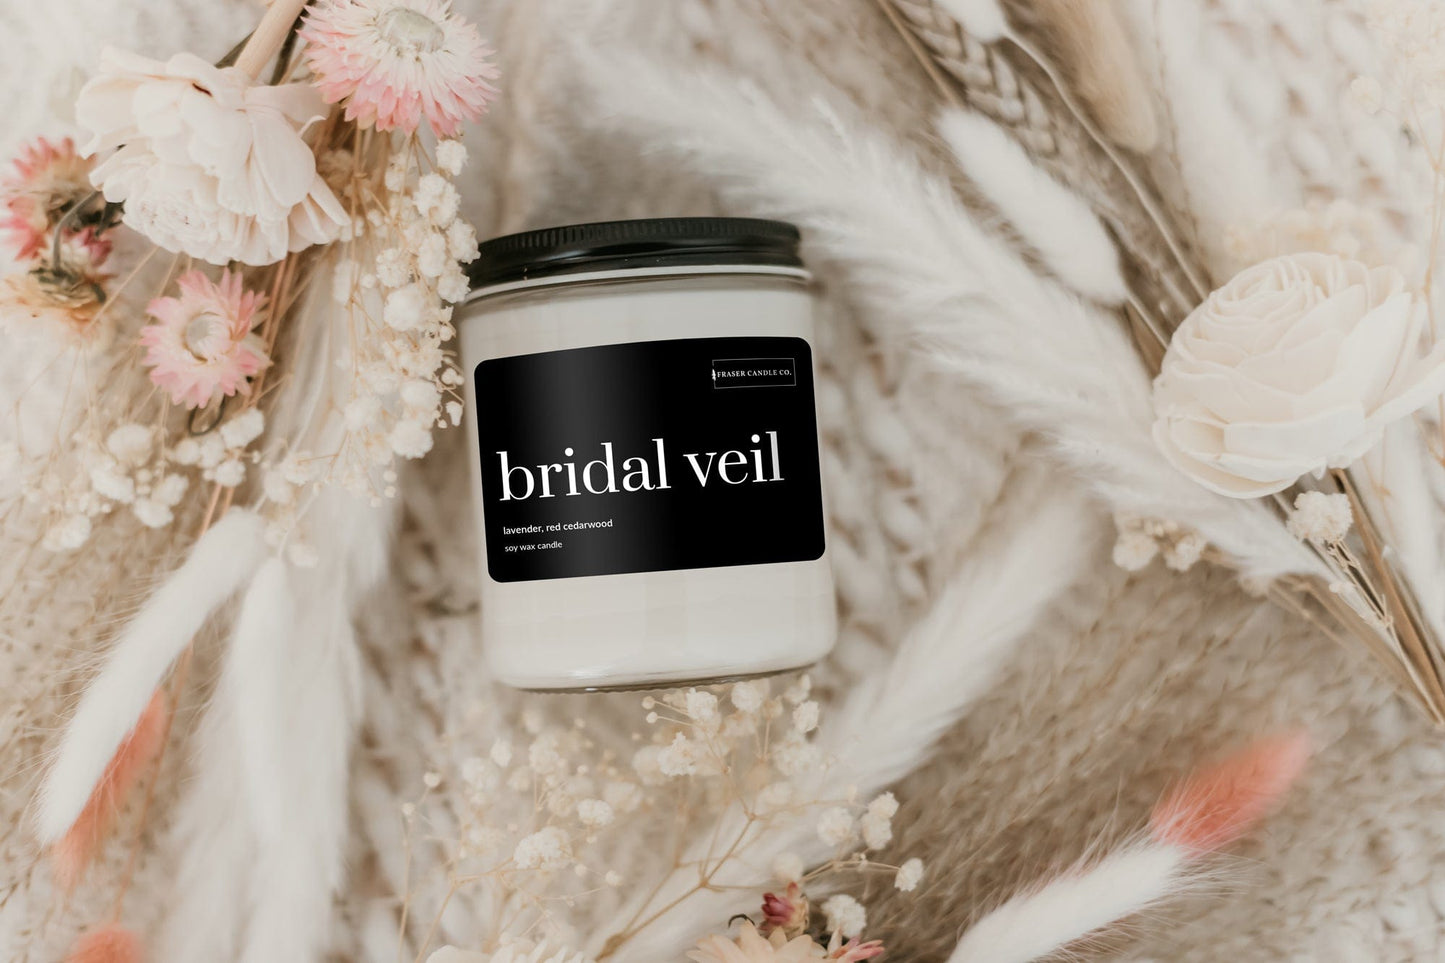 Bridal Veil - Soy Wax Candle